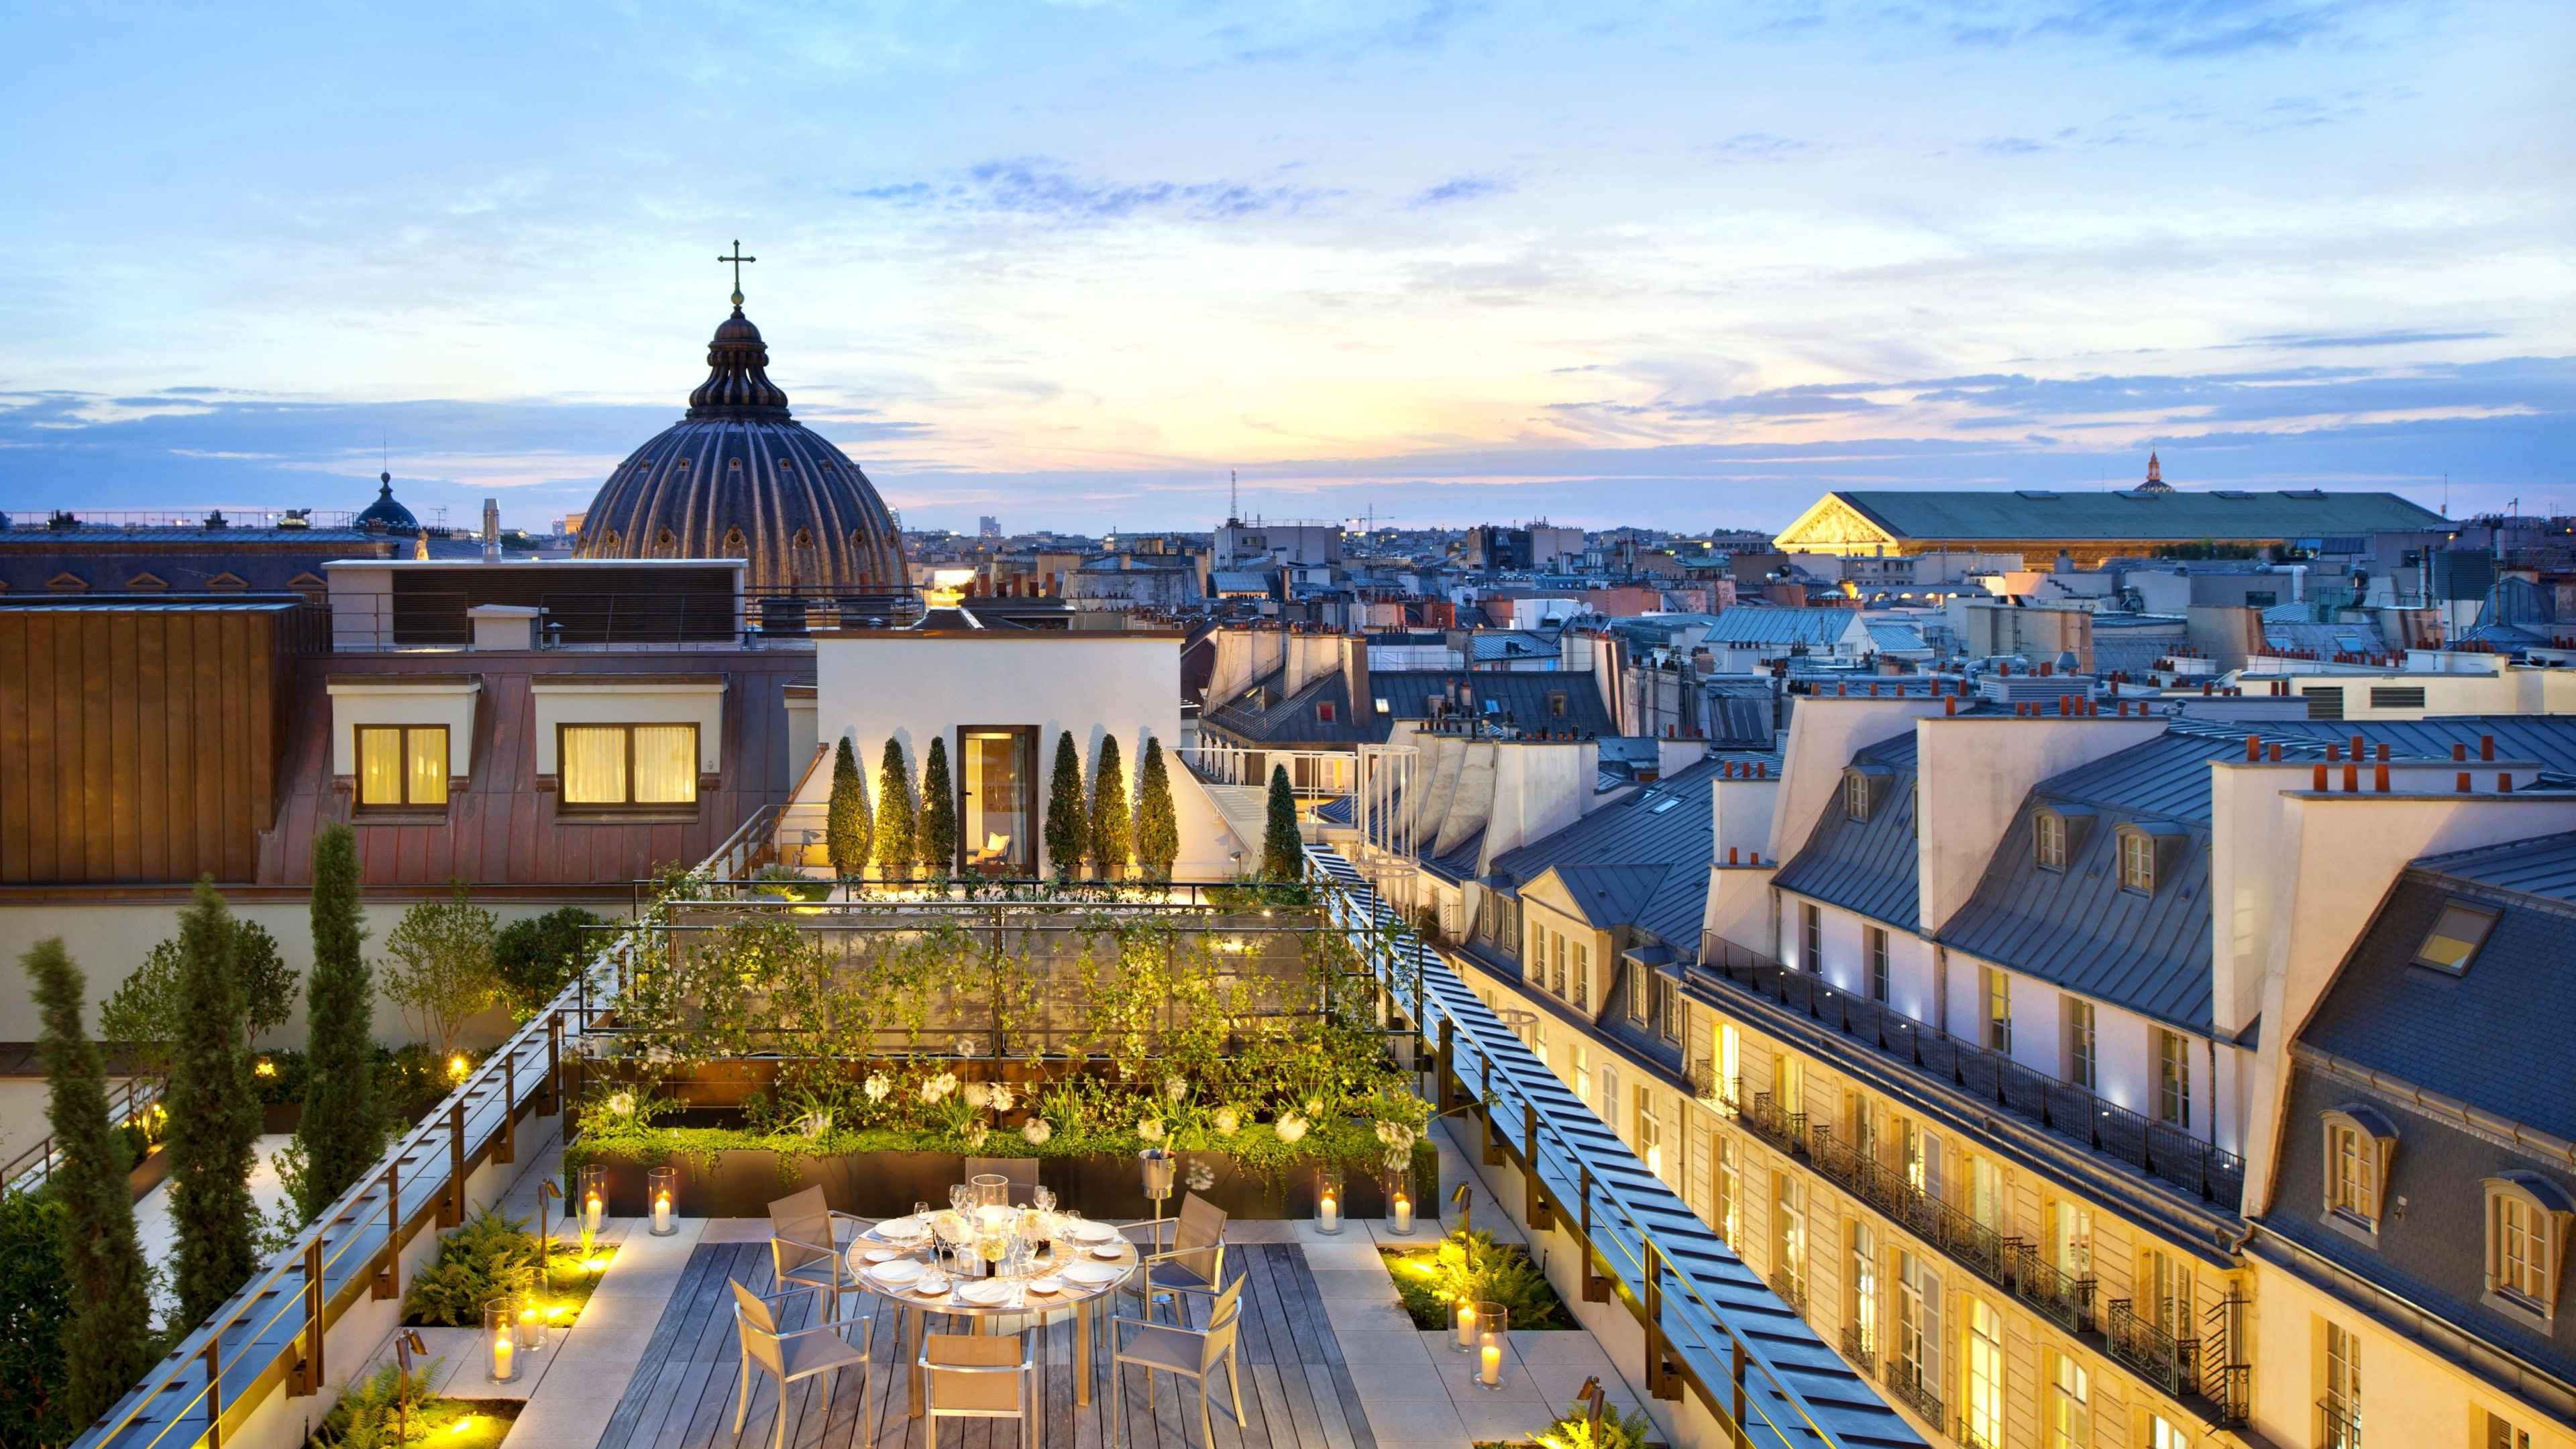 Royal mandarin suite, Paris cafe twilight, Afternoon hotel architecture, 3840x2160 4K Desktop